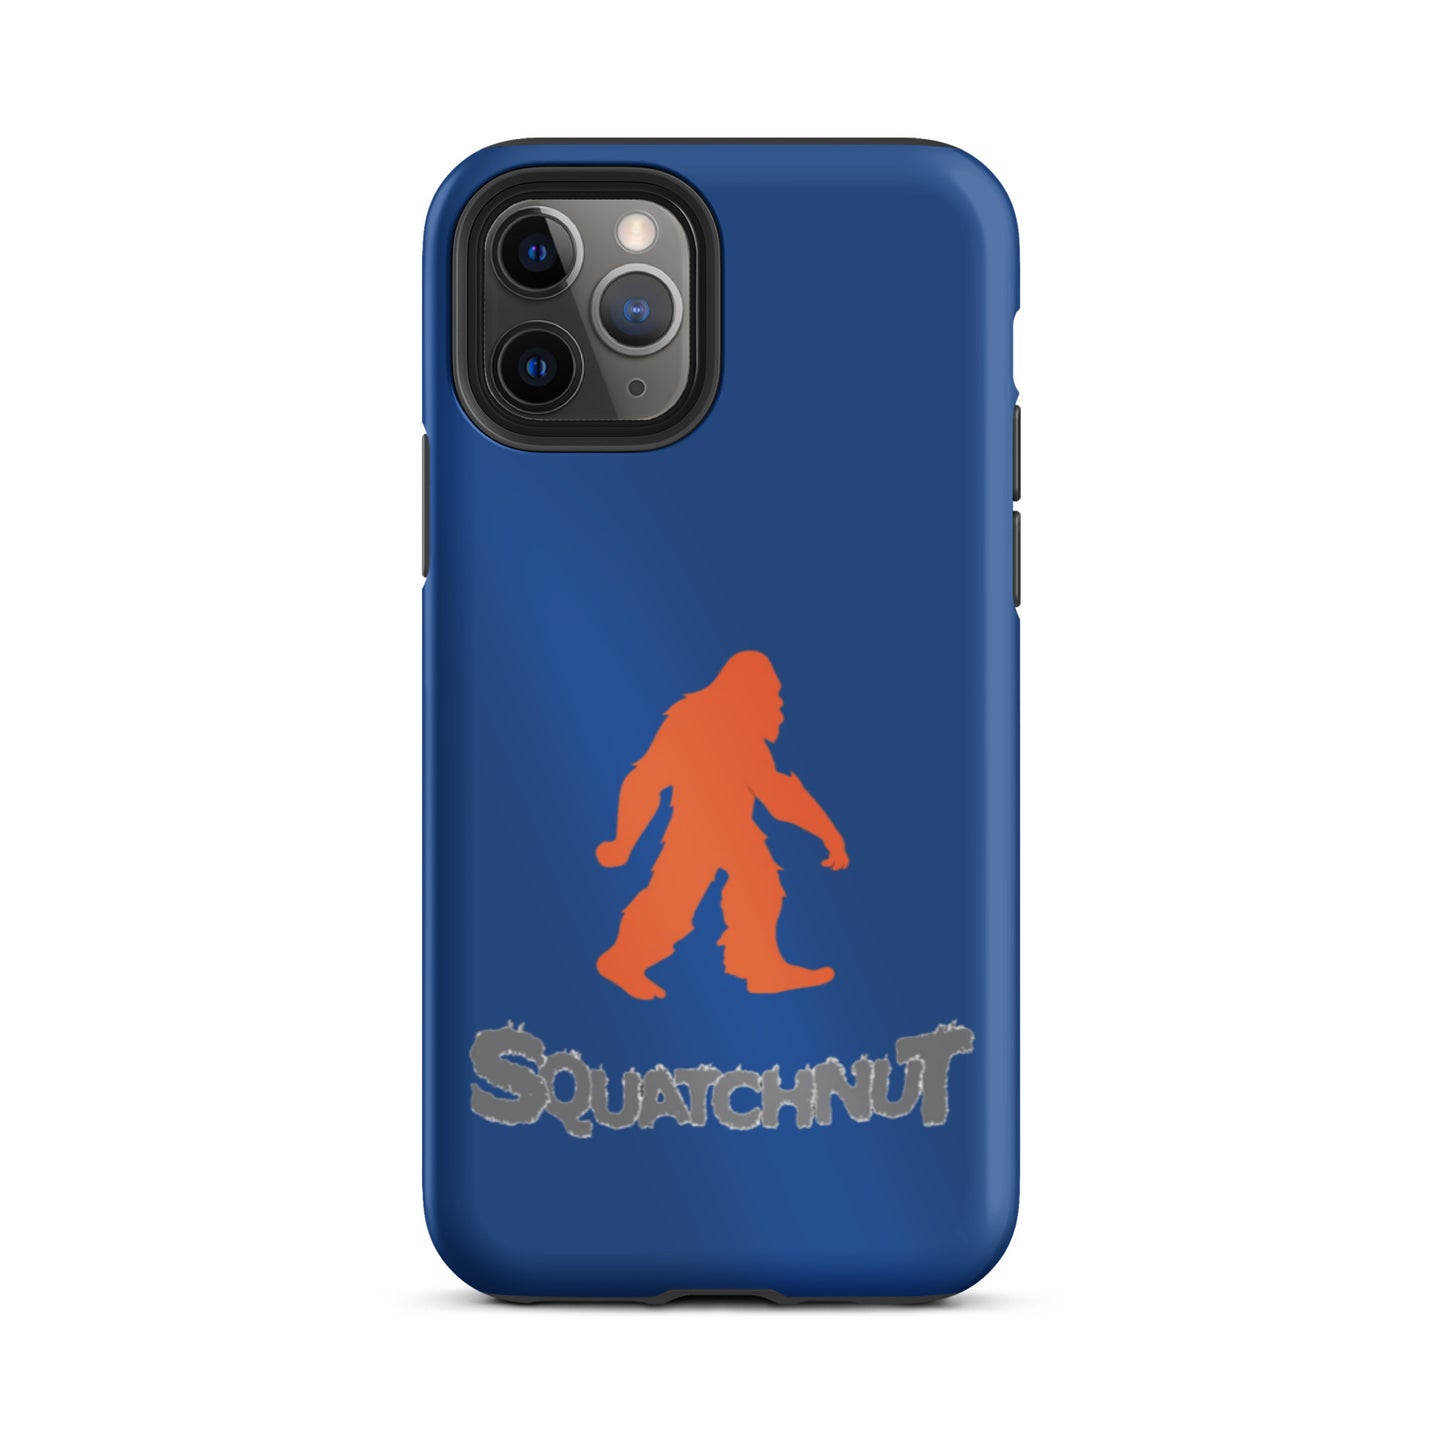 Blue and Orange Squatch Tough iPhone case